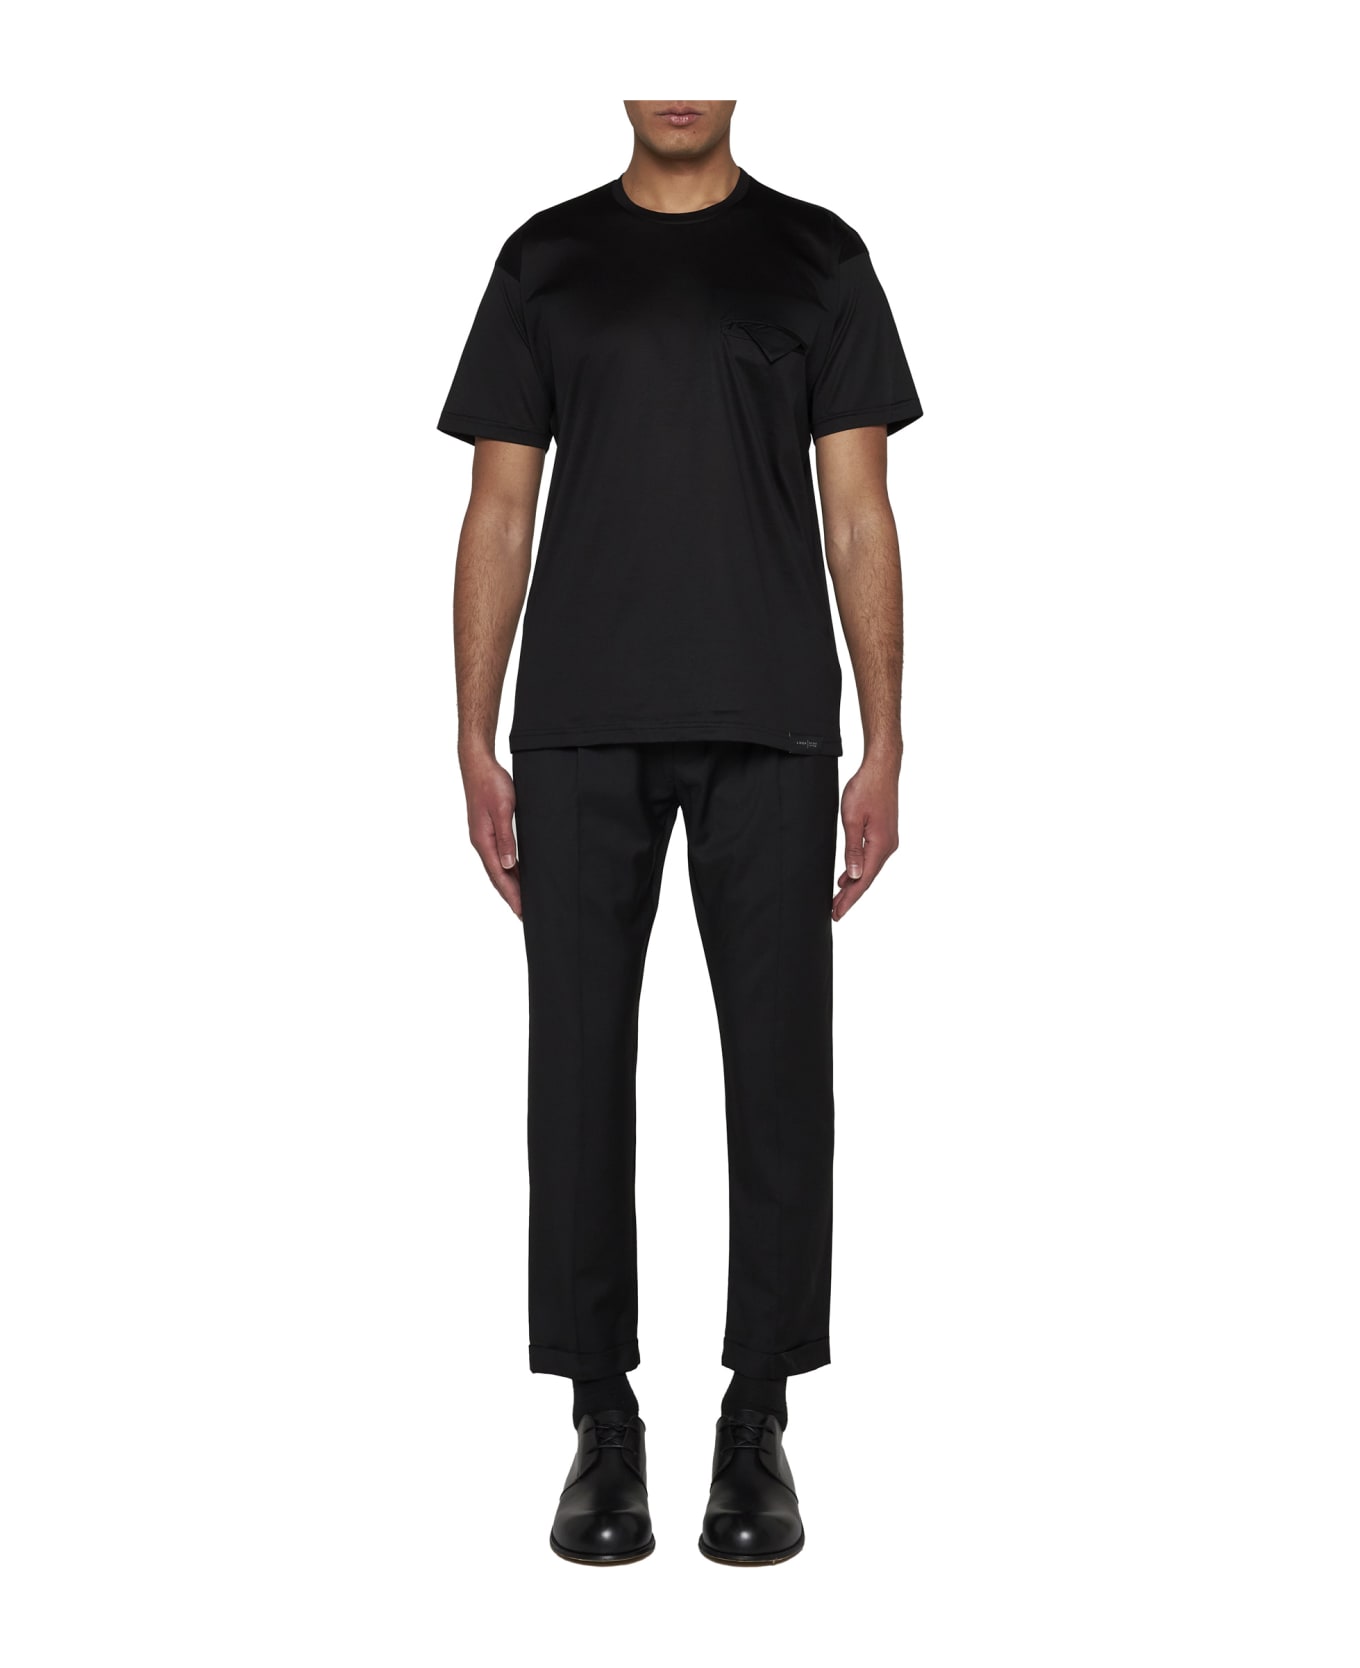 Low Brand T-Shirt - Jet black